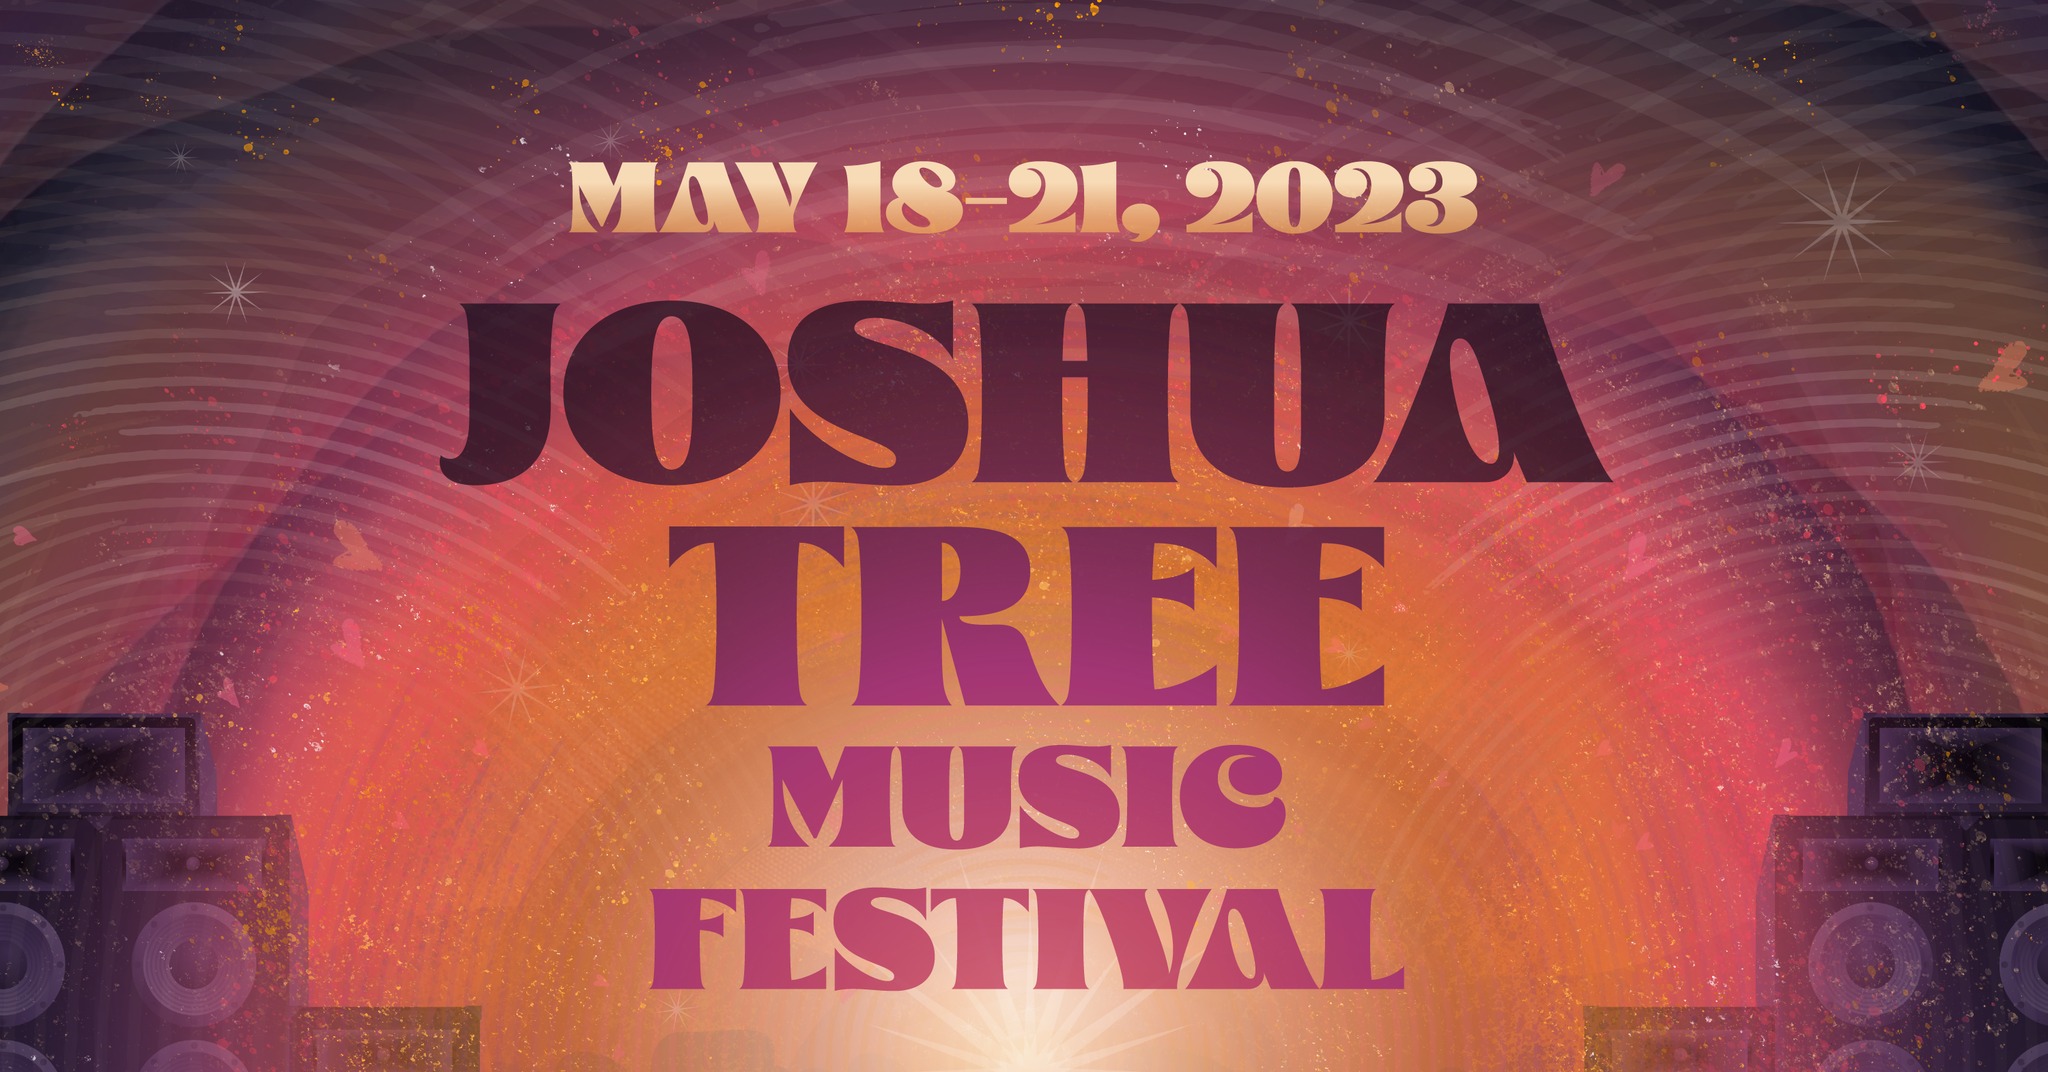 Joshua Tree Music Festival is Two Weeks Away